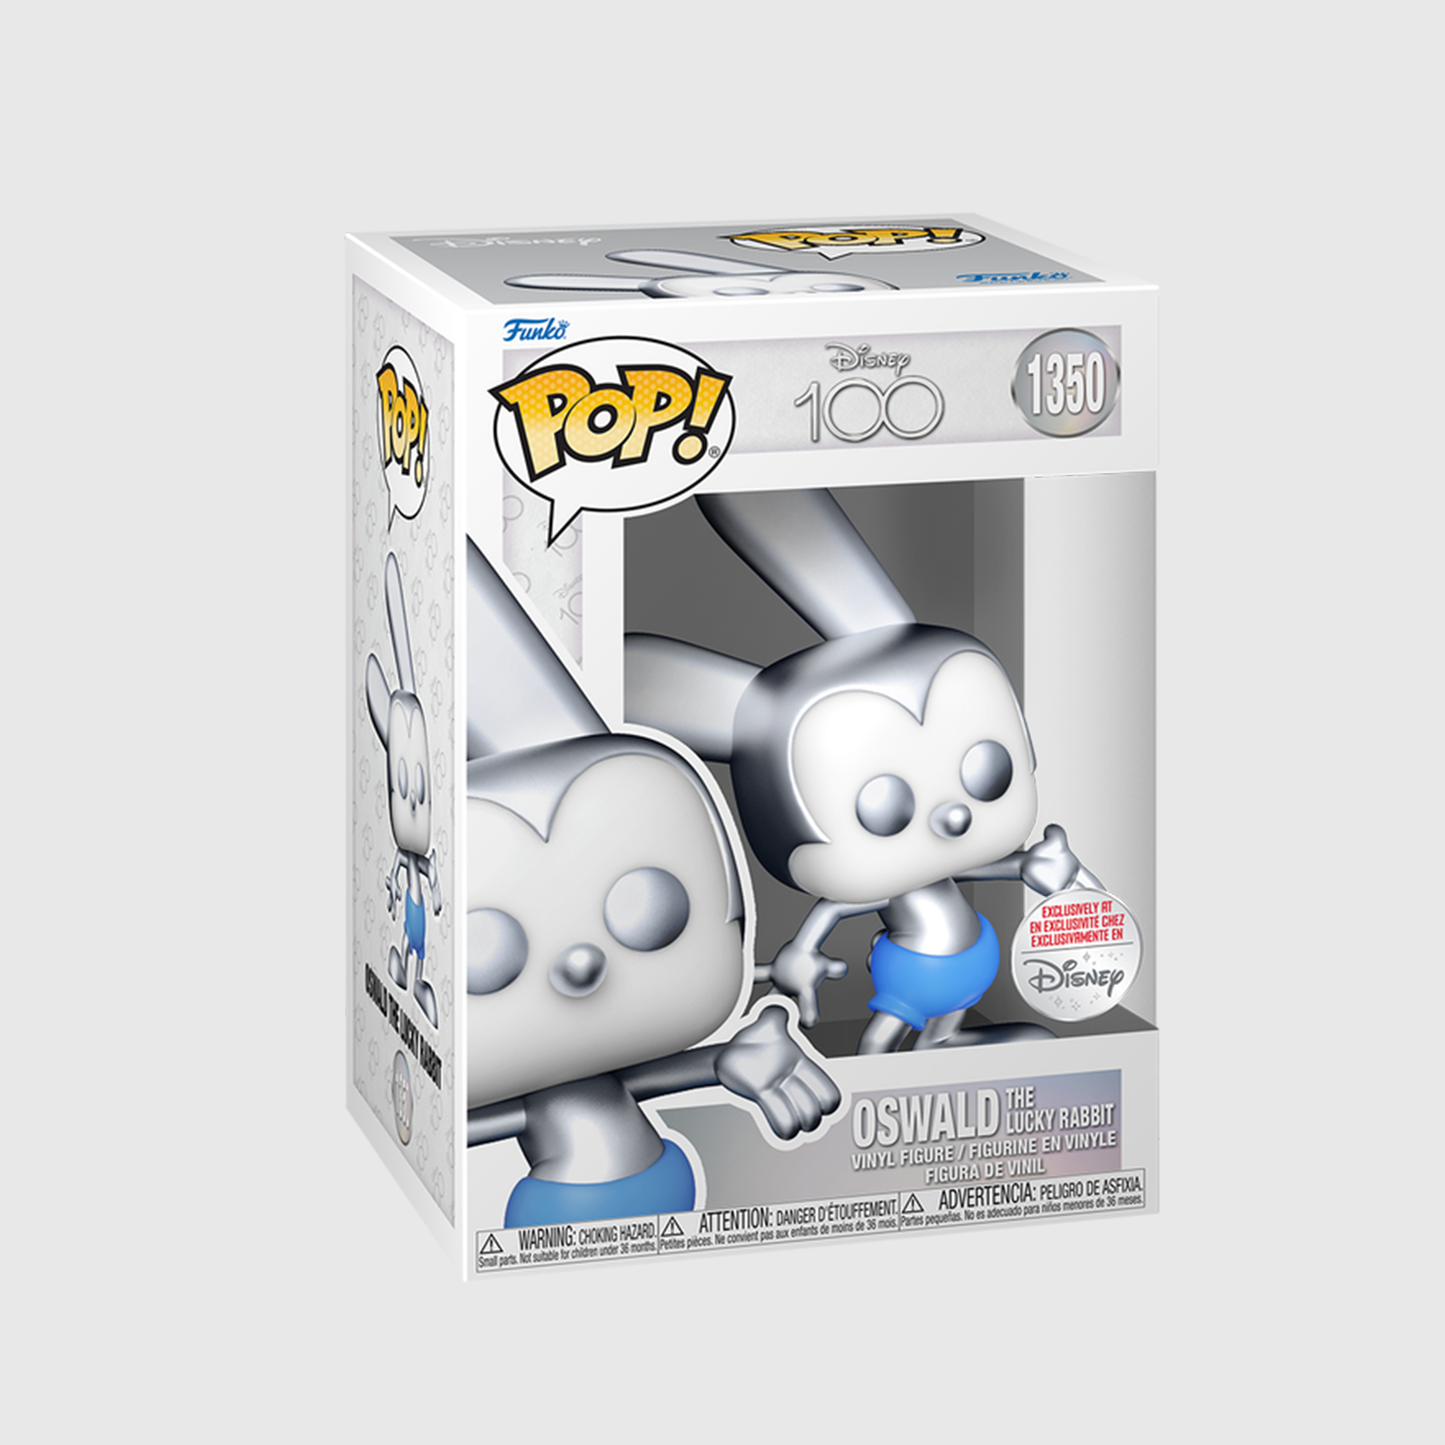 (PRE-ORDER) Funko POP! Disney: Oswald the Lucky Rabbit - Platinum (Disney Exclusive) #1350